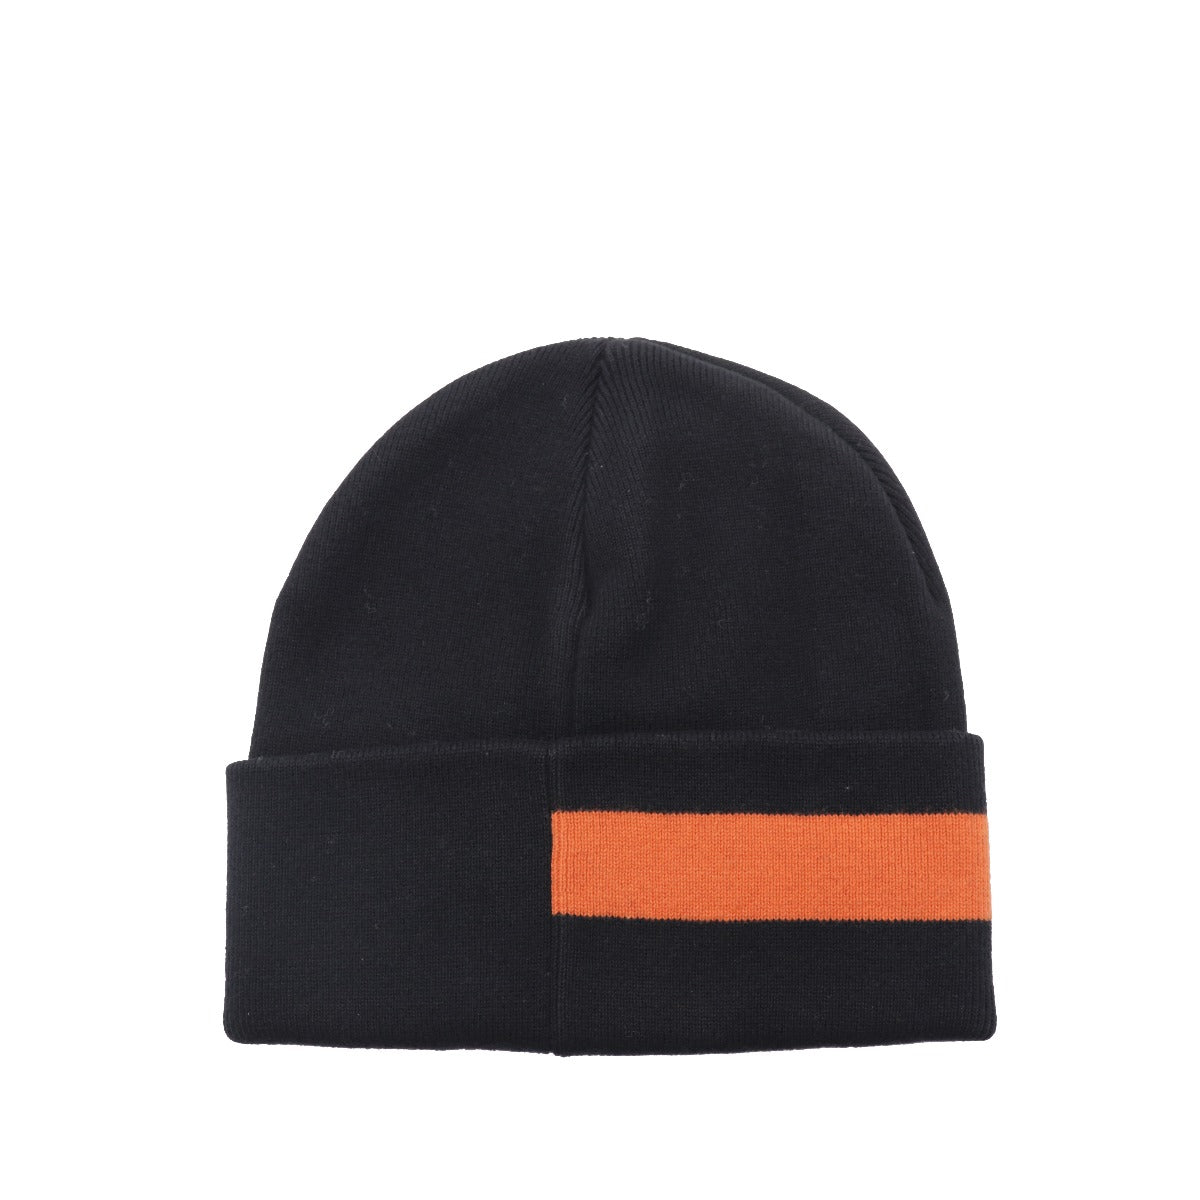 Calvin Klein Black Men's Hat with Taped Logo